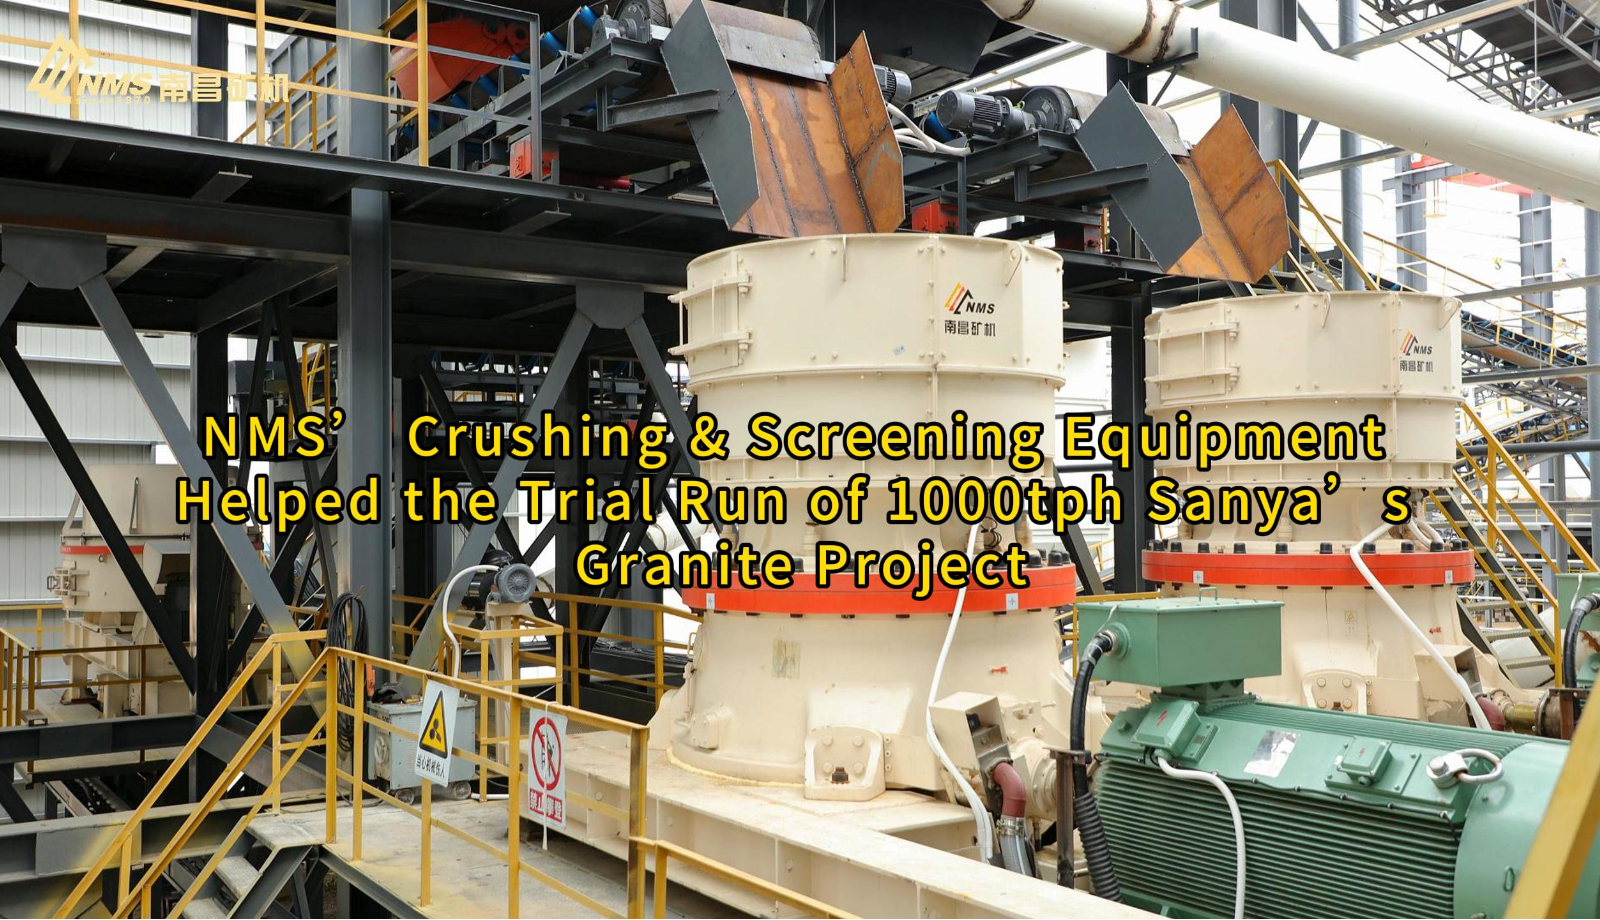 NMS’ Crushing & Screening Equipment Helped the Trial Run of 1000tph Sanya’s Granite Project